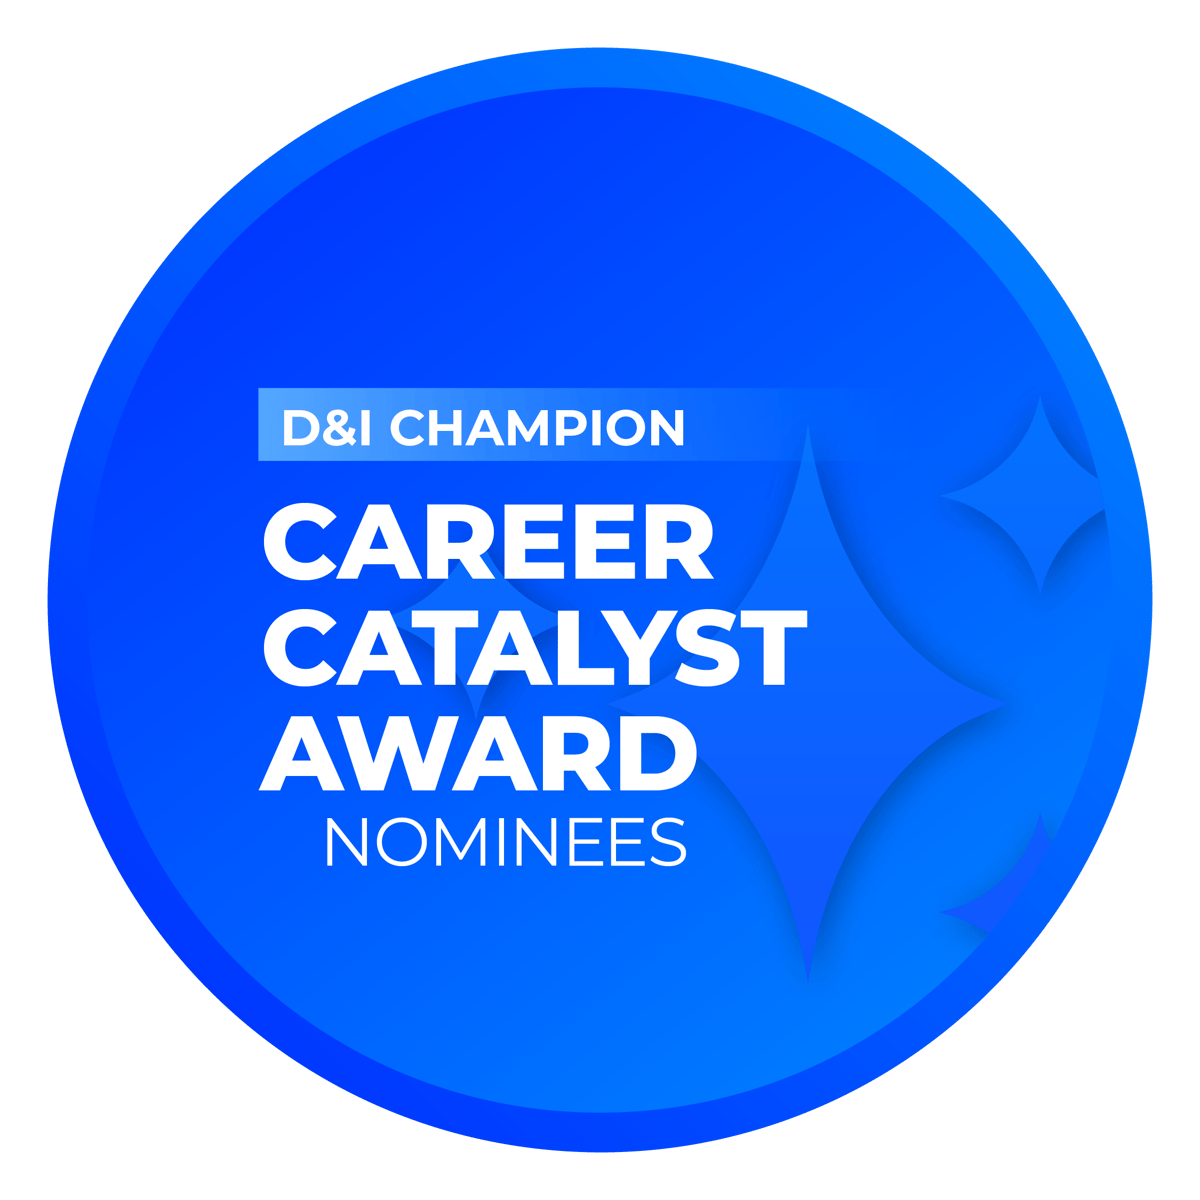 Career Catalyst Award: D&I Champion Nominees